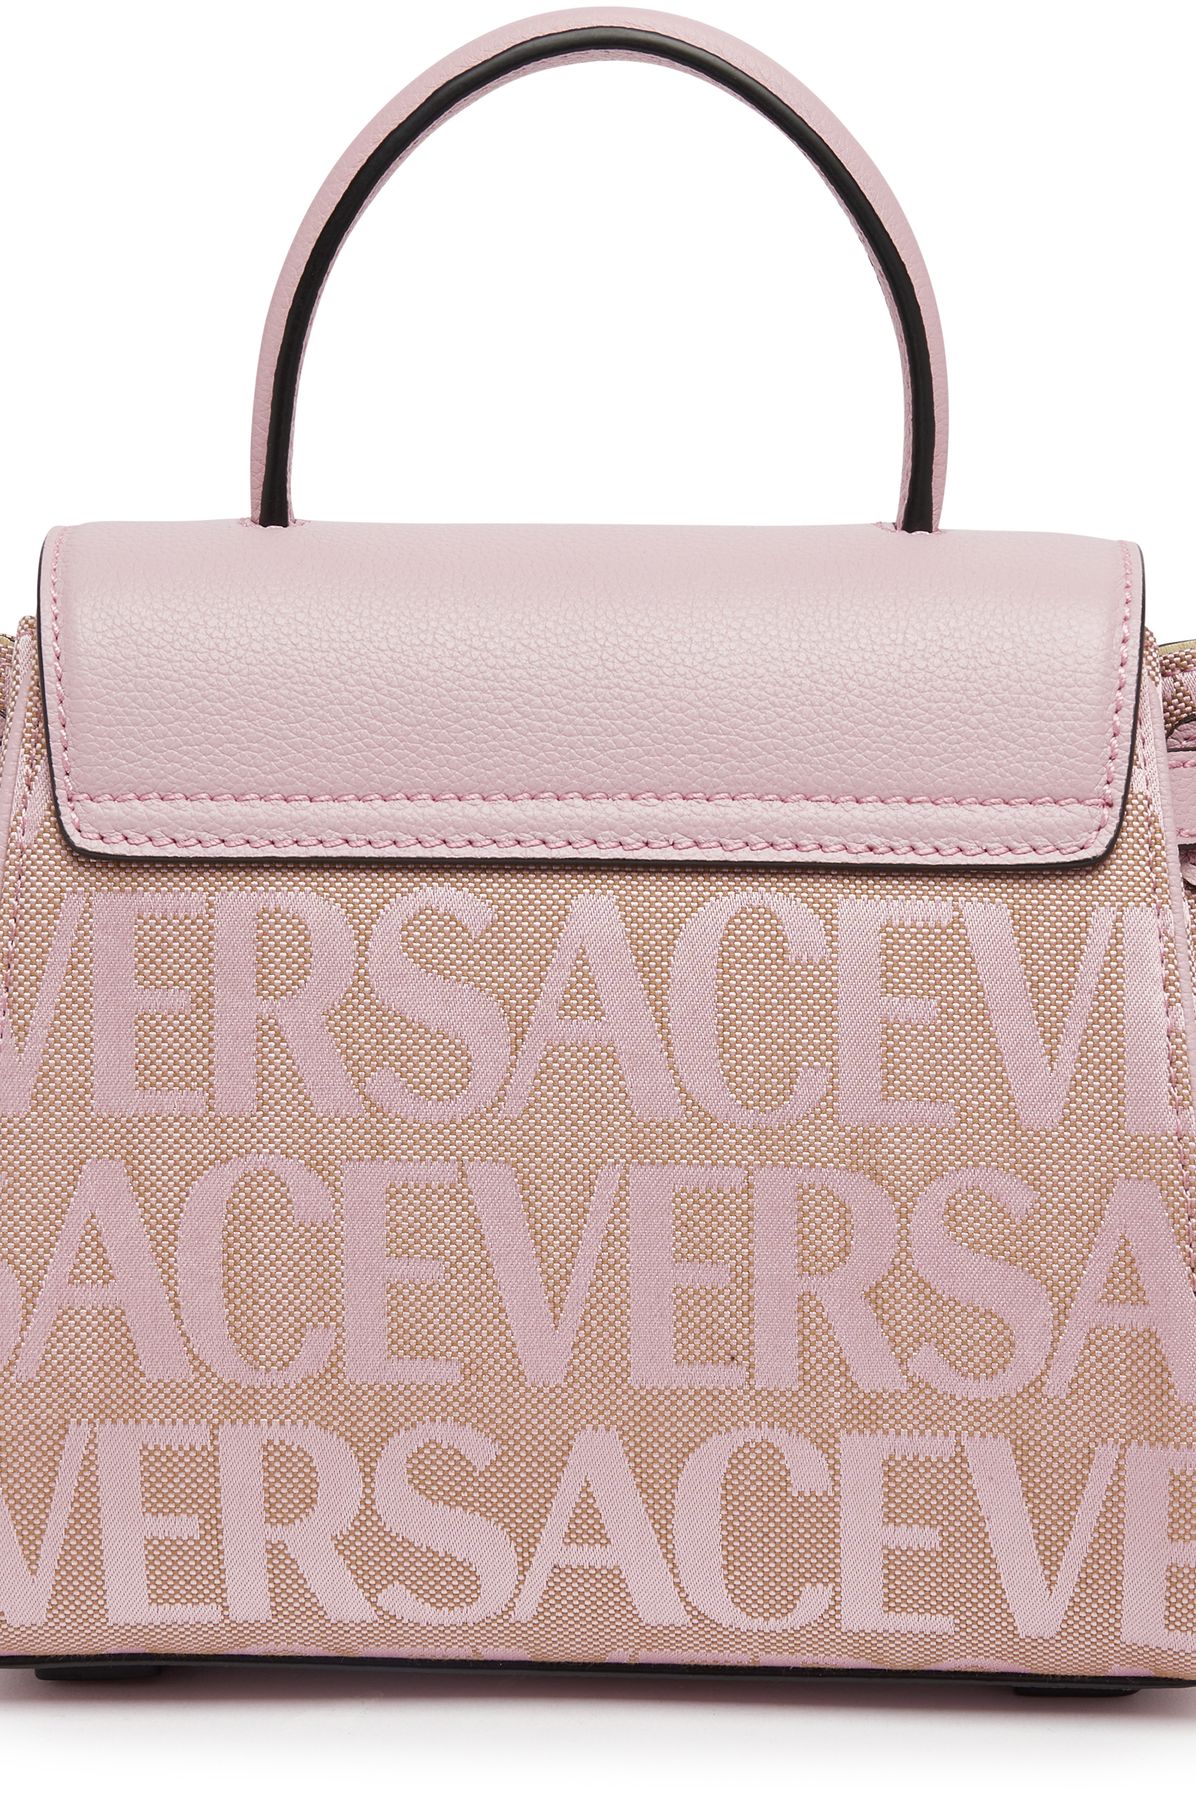 Versace La Medusa small handbag